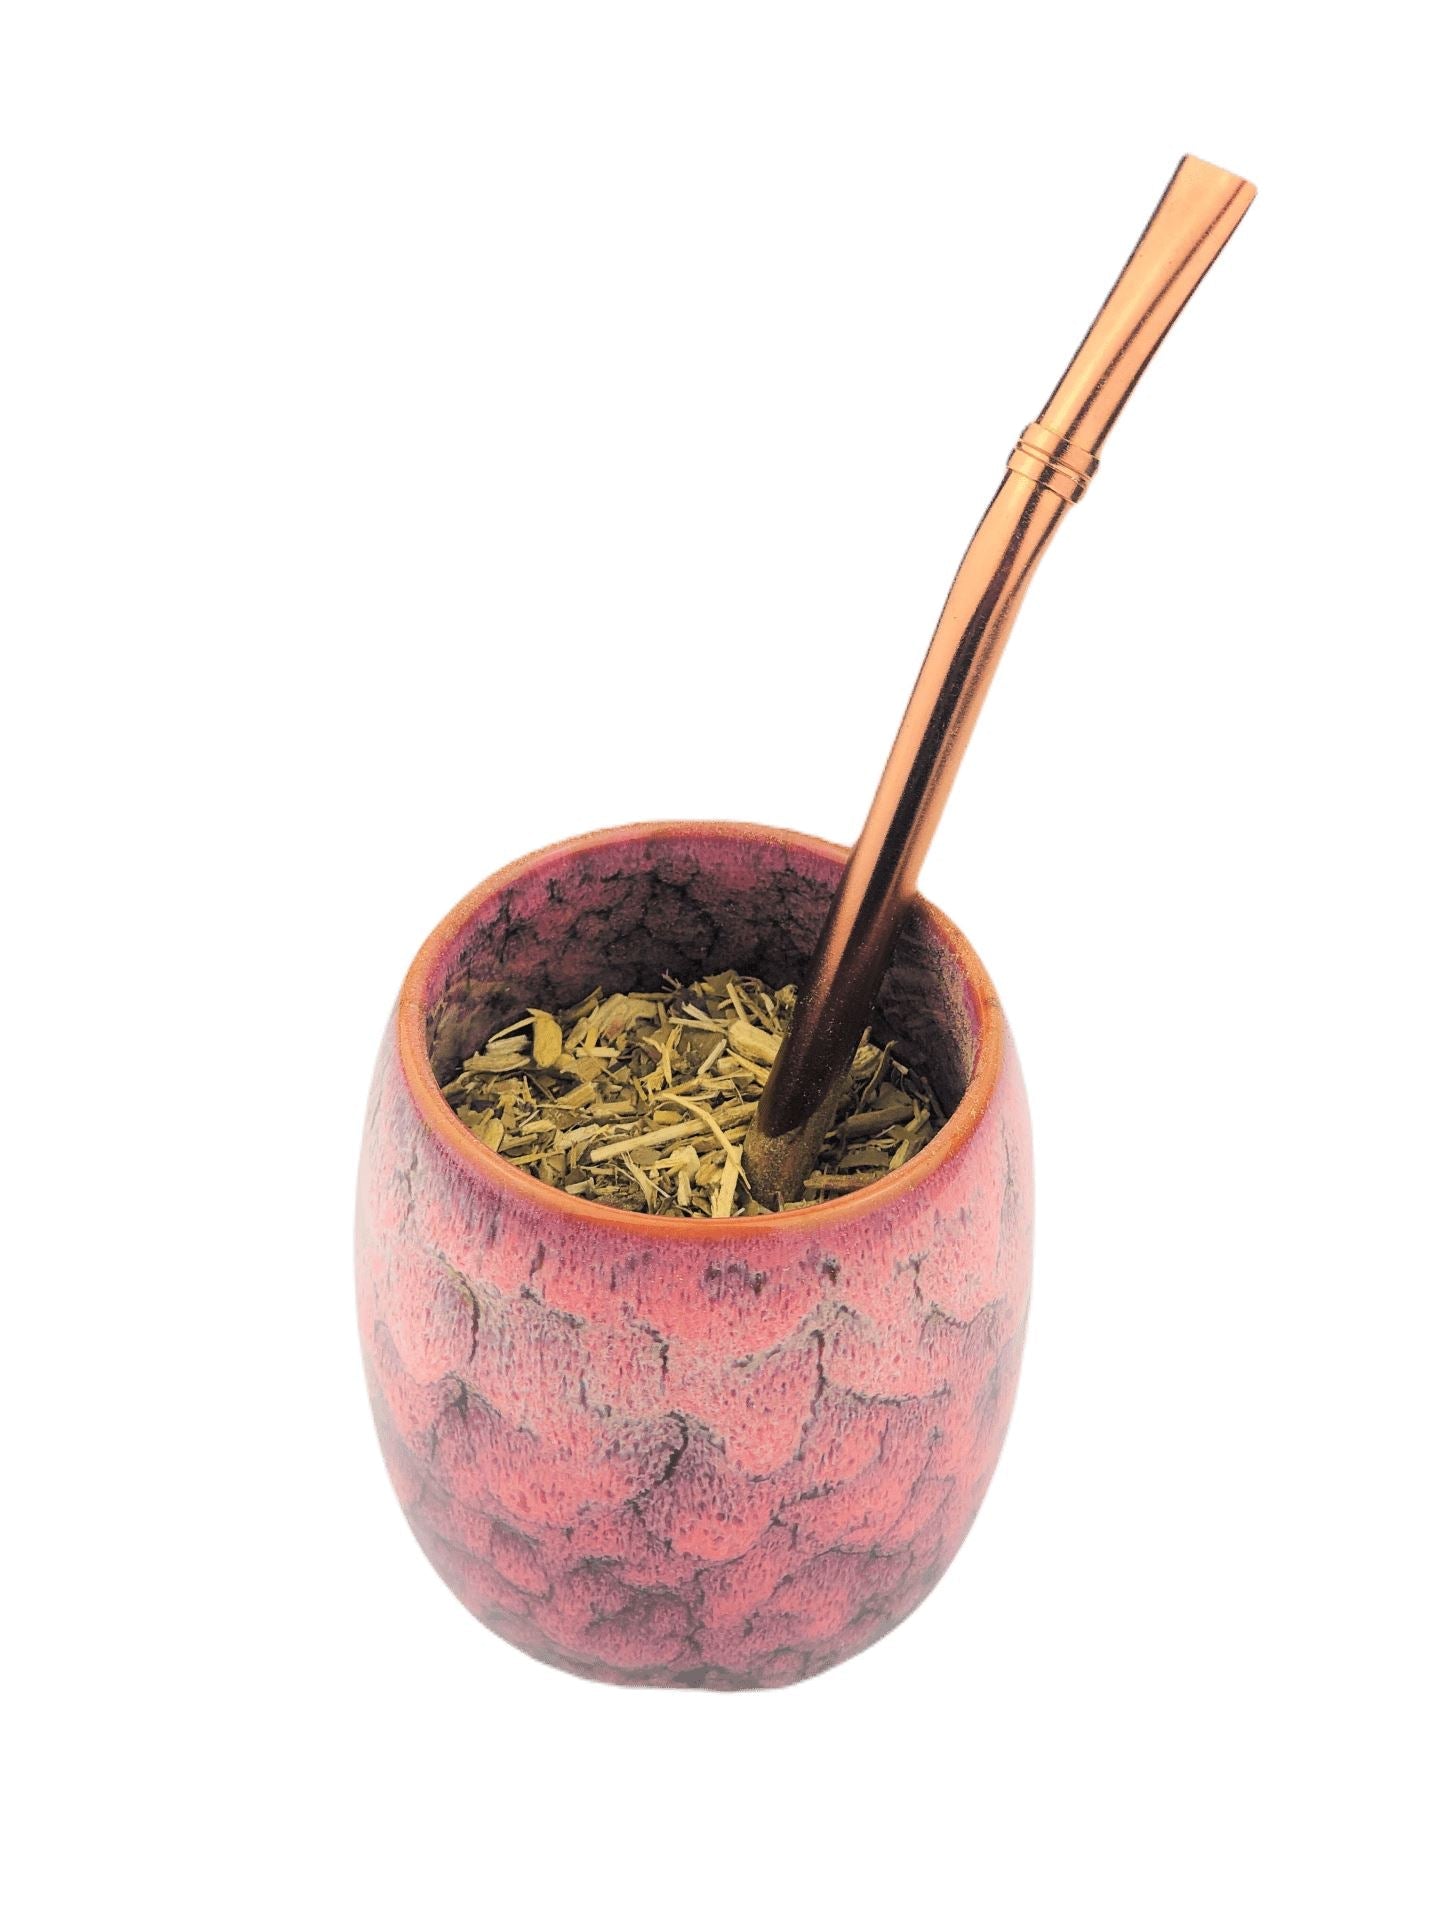 Ceramic Mate Gourd and Straw Set - Rose (Mate and bombilla) Mates Hispanic Pantry 